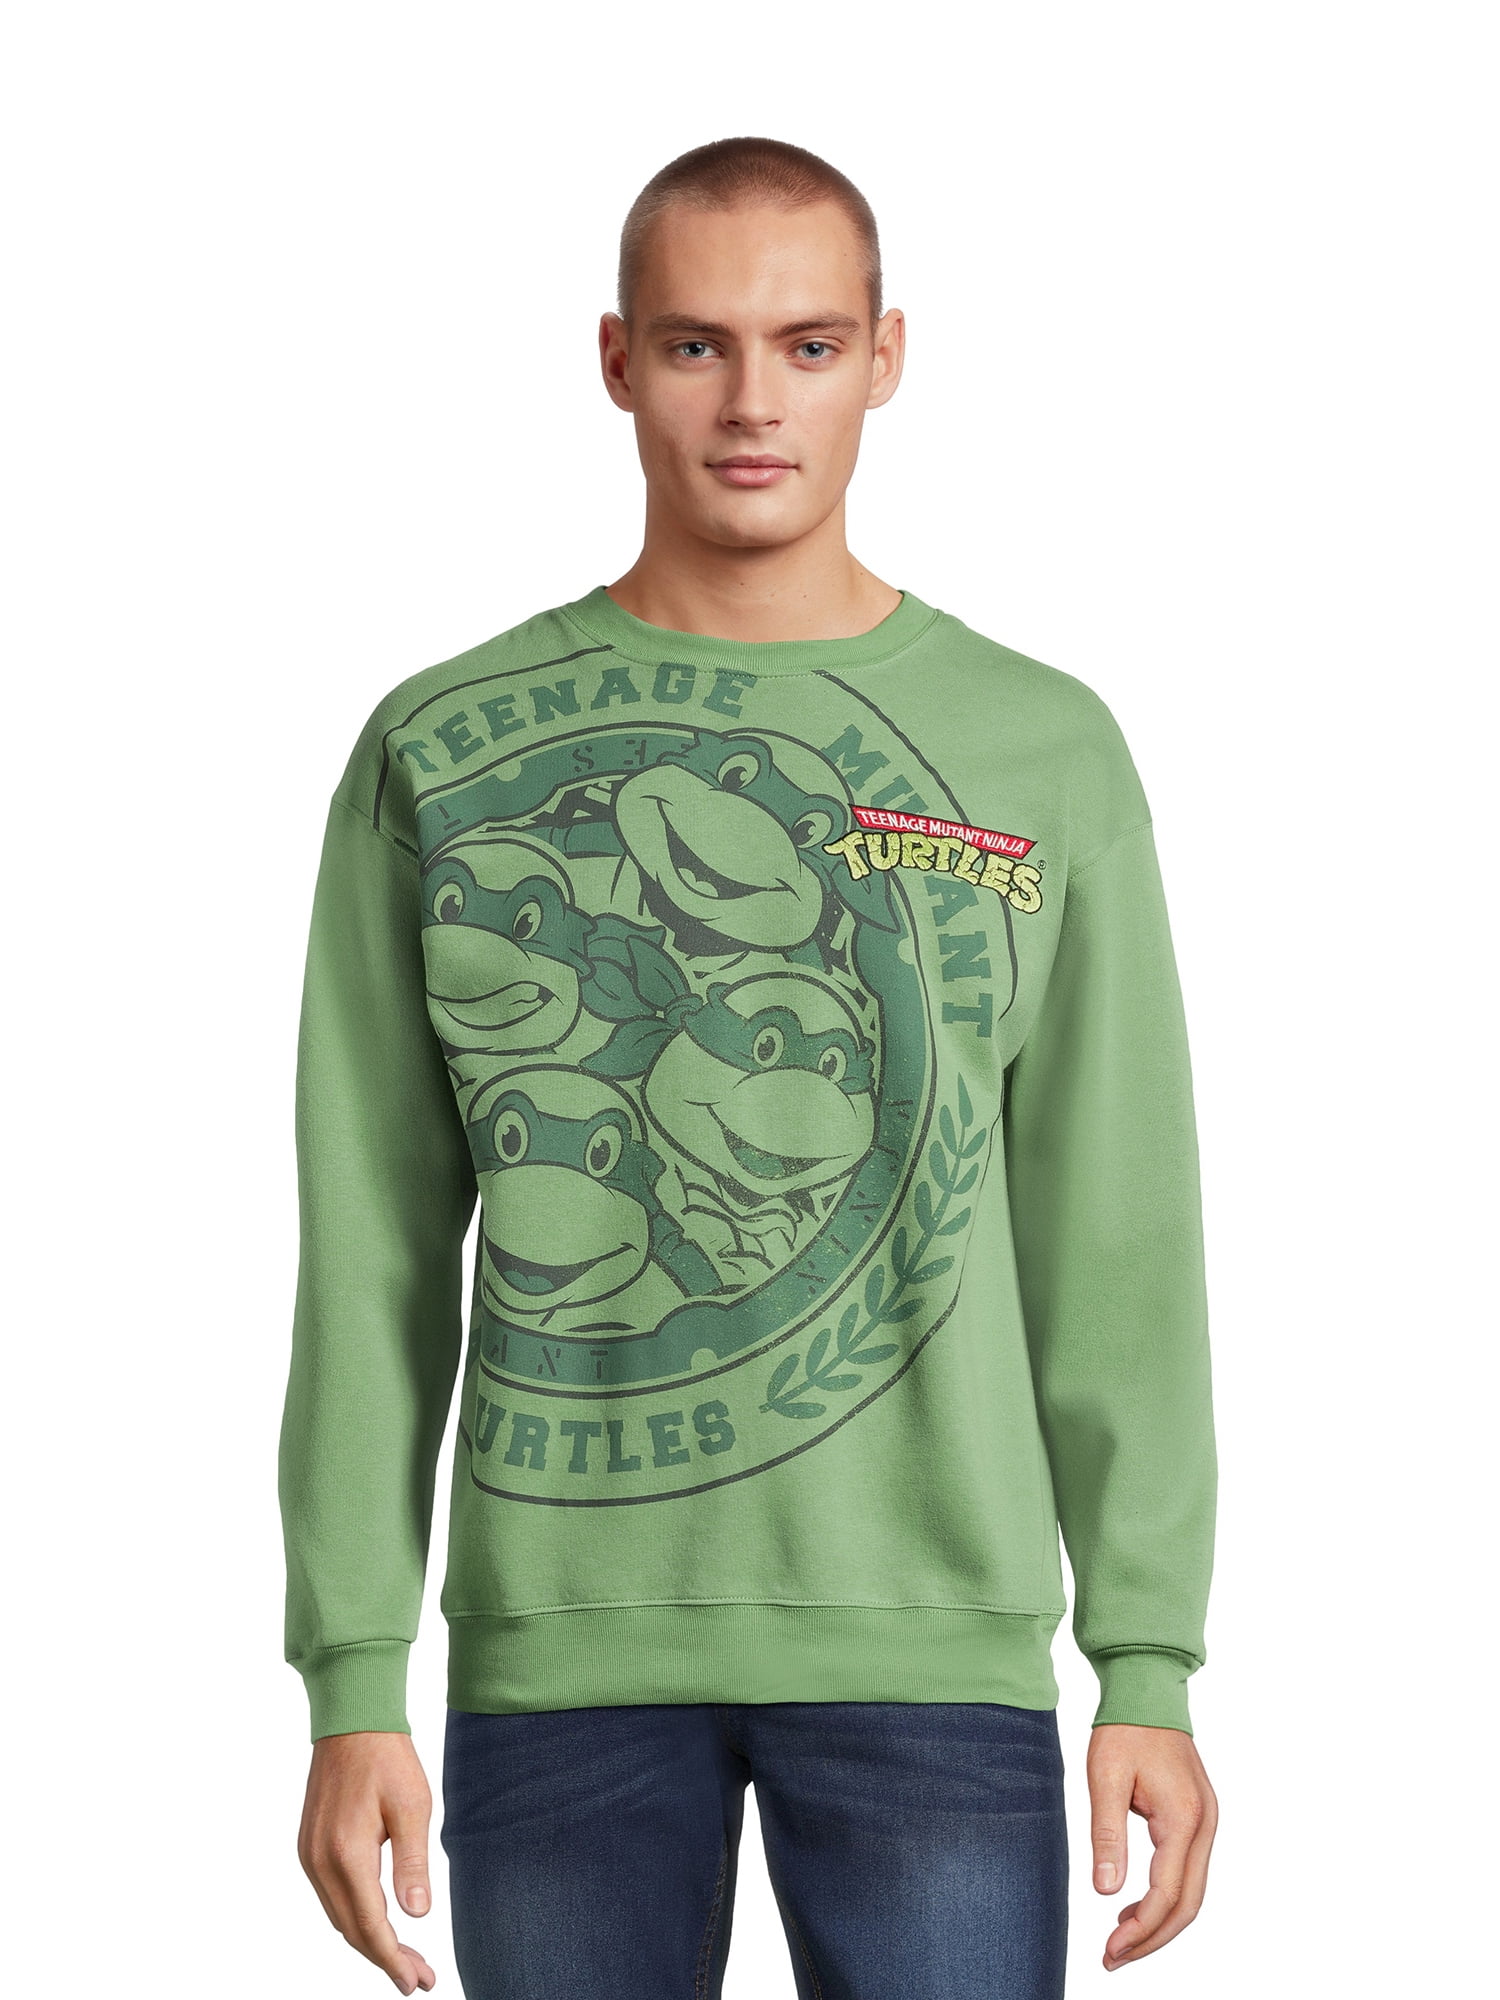 Teenage Mutant Ninja Turtles Men's & Big Men's Embroidered Graphic Tee Shirt, Sizes XS-3XL